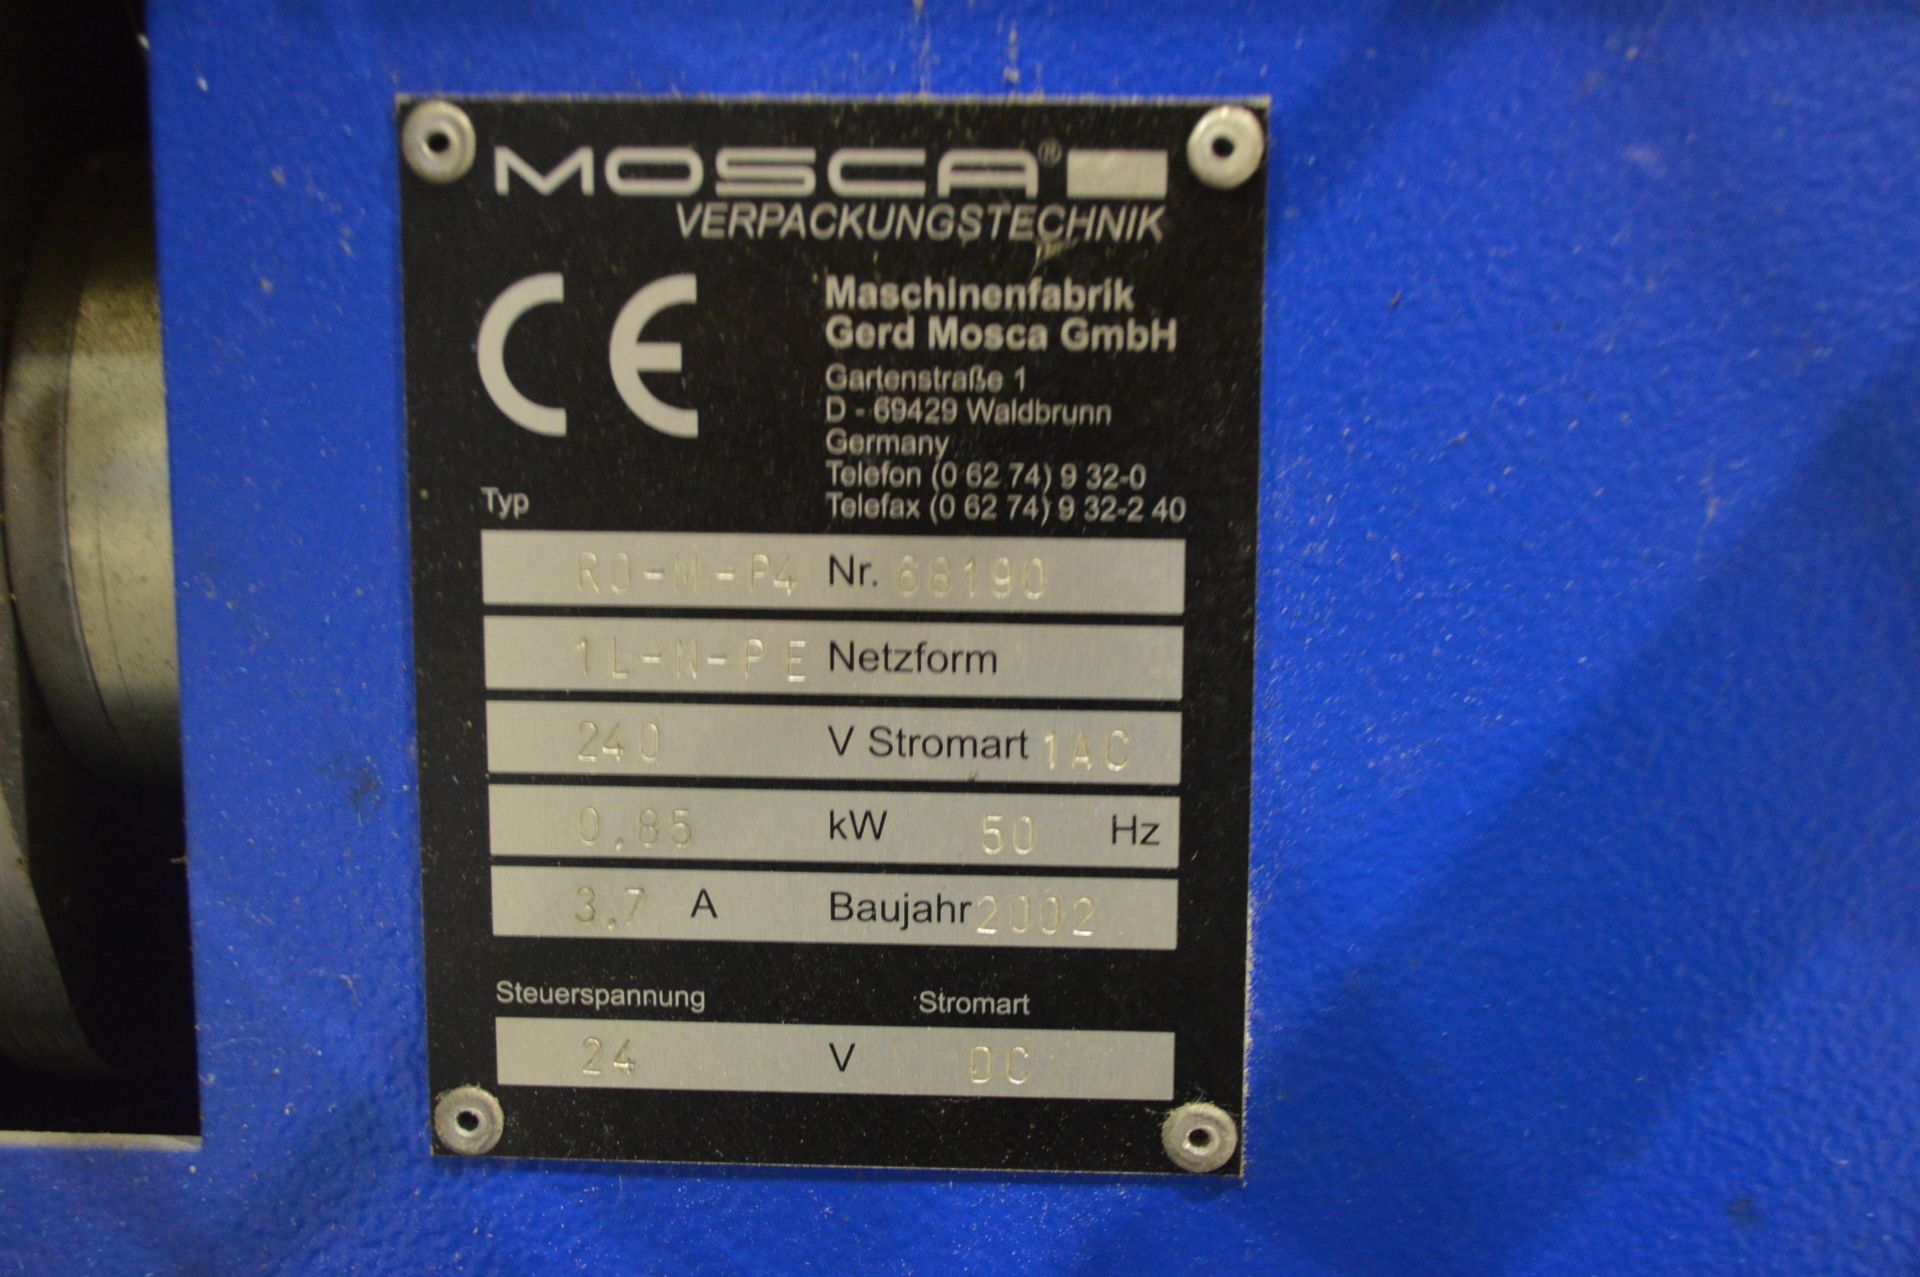 Mosca RO-M-P4 STRAP BANDING MACHINE, serial no. 68 - Image 3 of 3